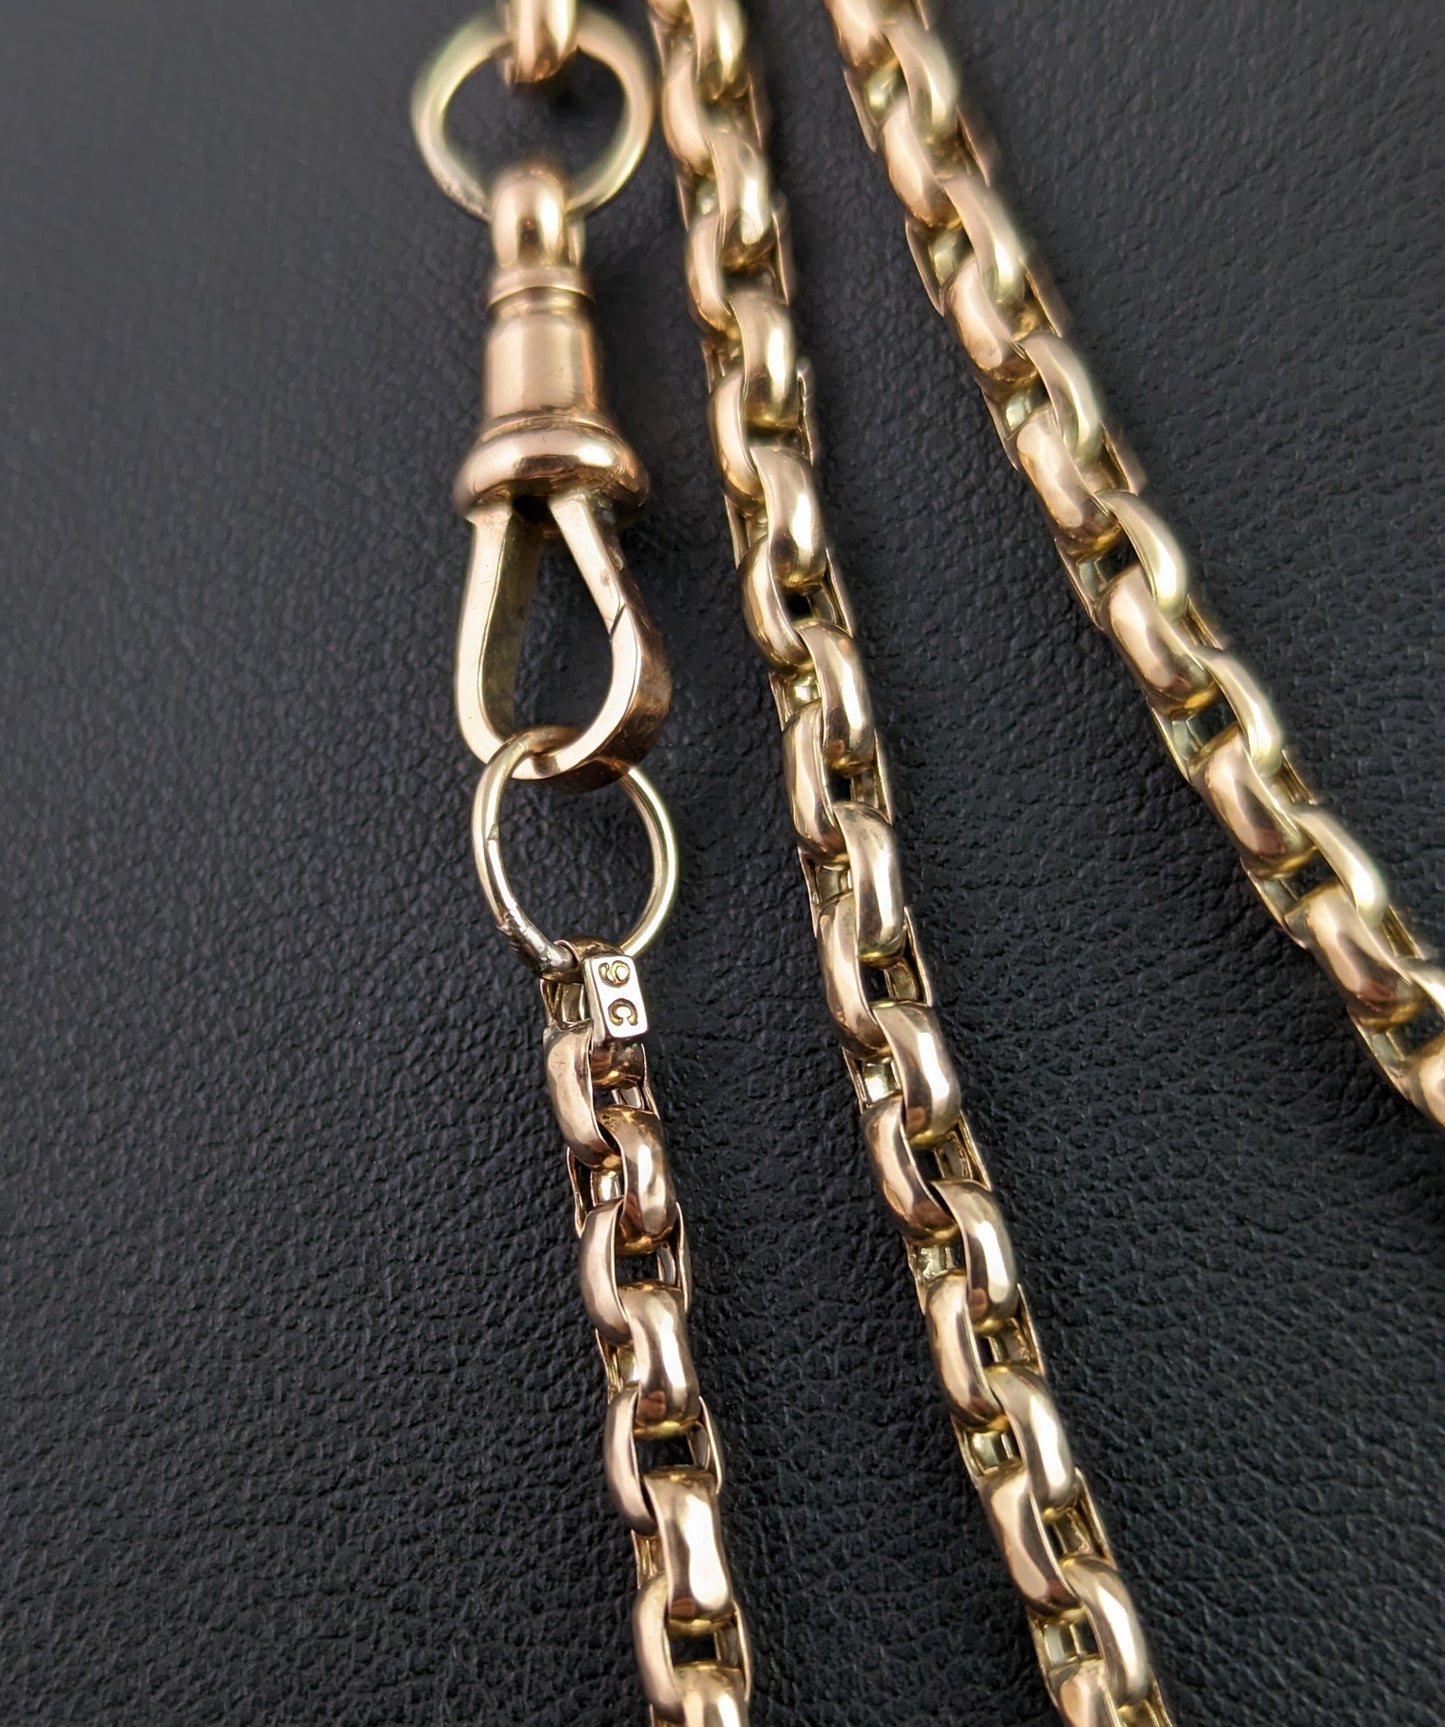 Antique 9ct gold long chain, longuard chain, Victorian